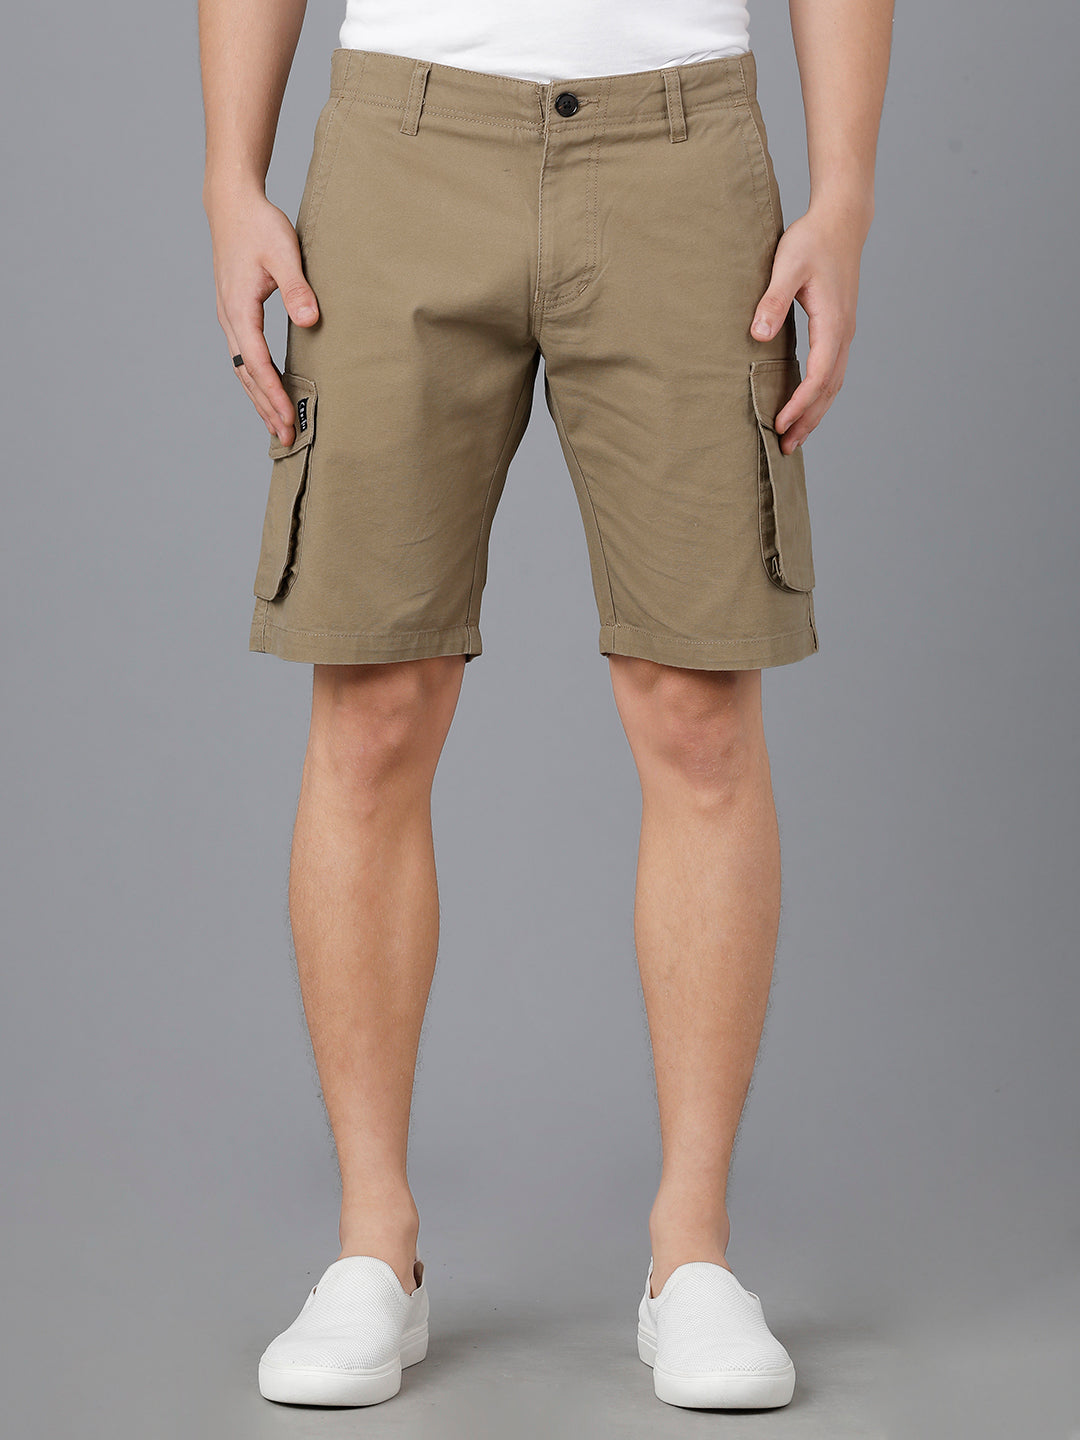 Six pocket cargo shorts